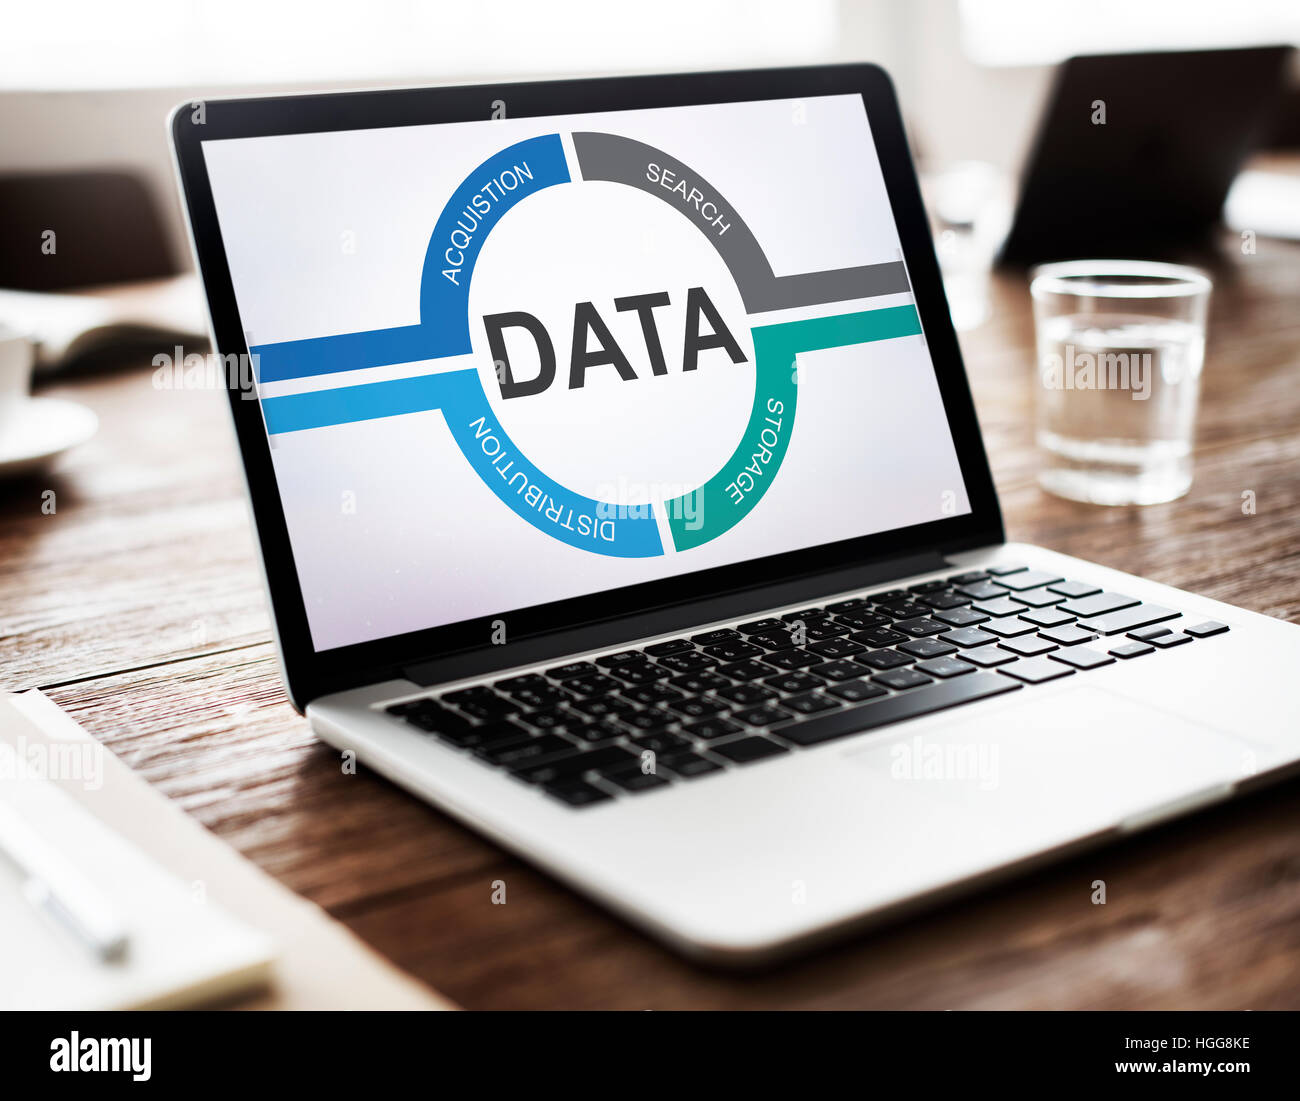 Data Analysis Information Technology Storage Concept Stock Photo